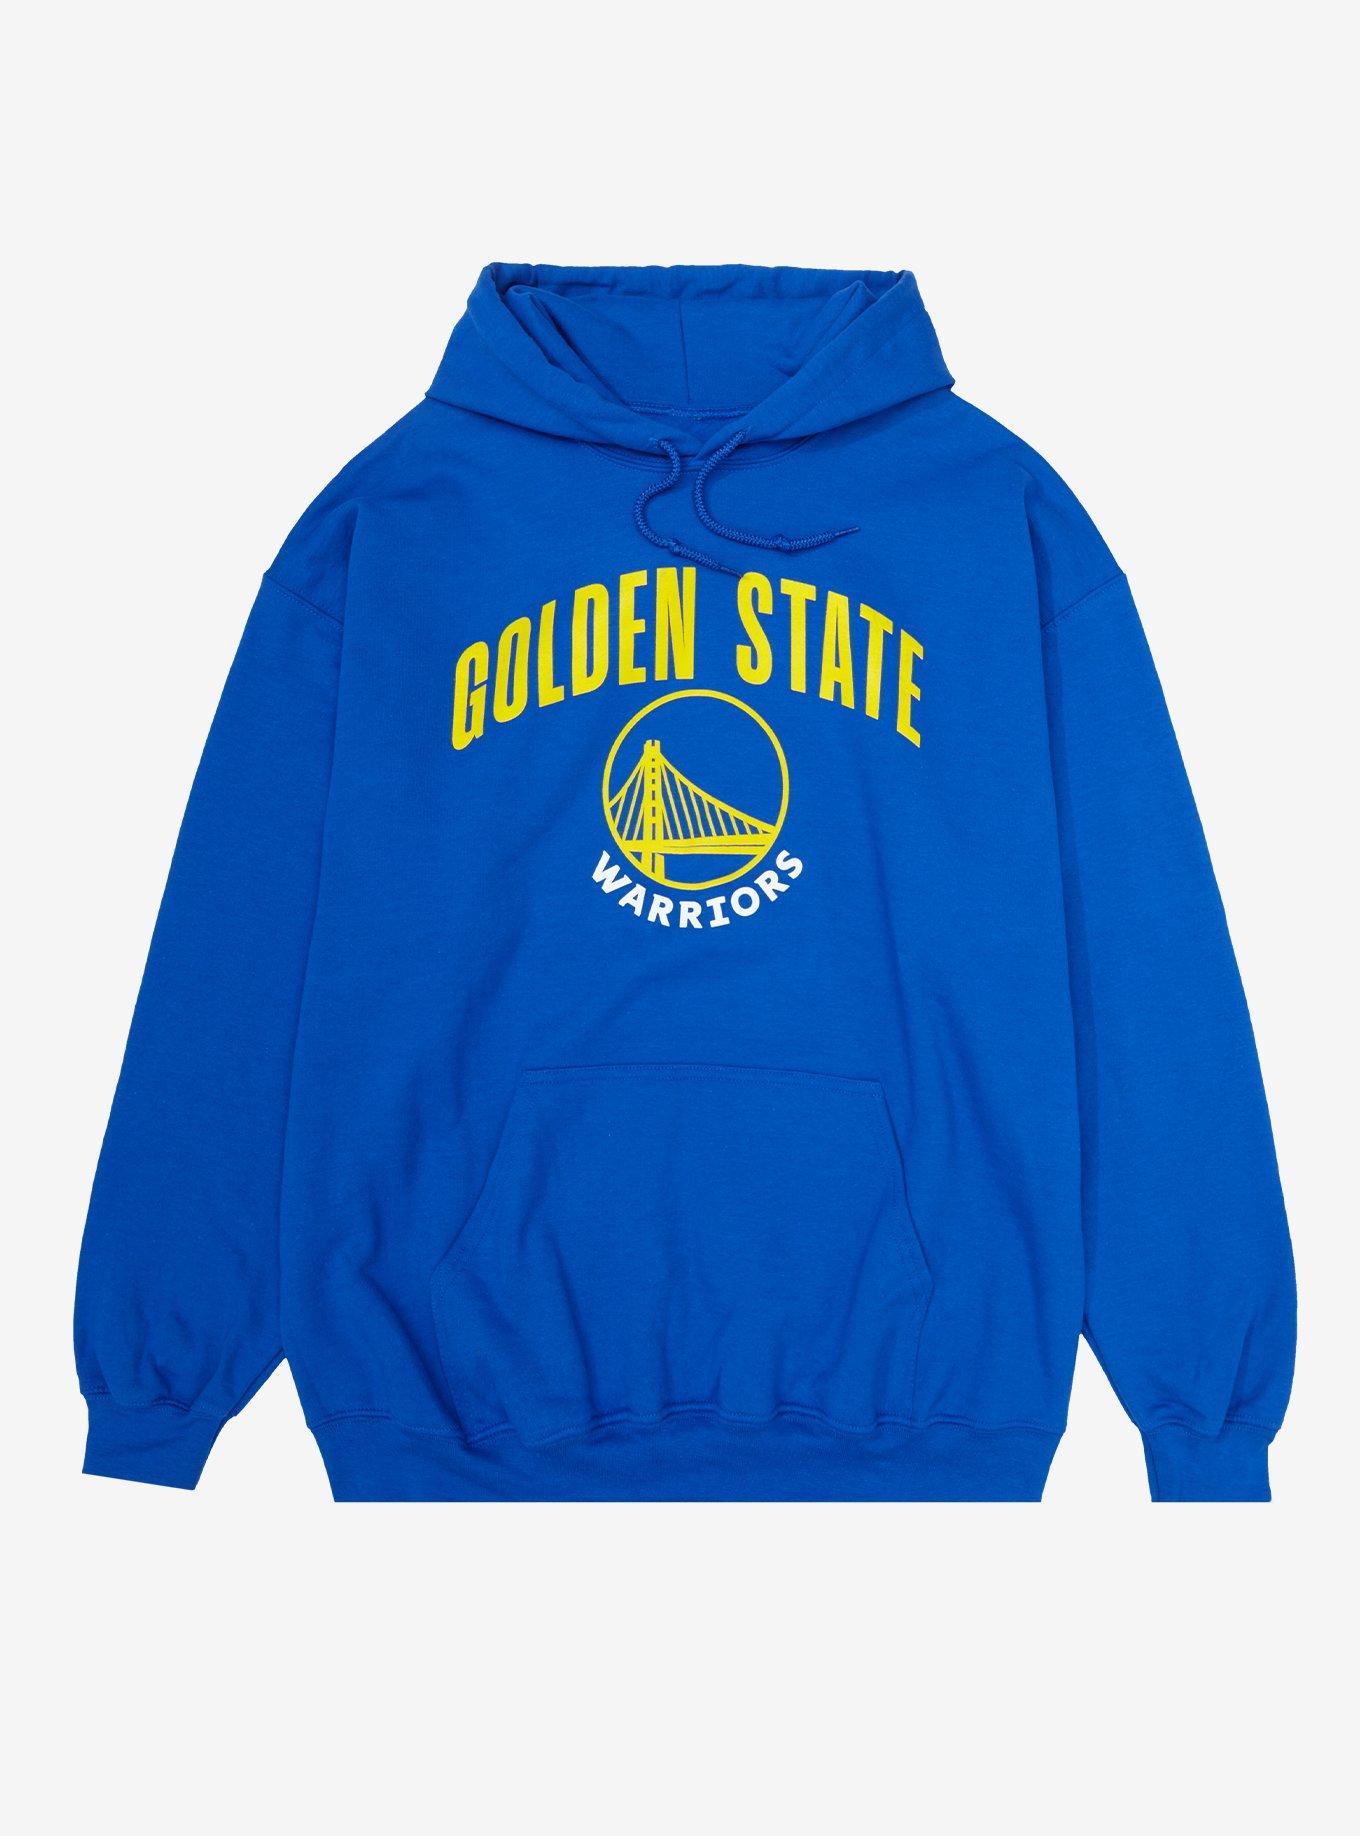 Golden State Warriors Hoodies - Pullover Blue Hoodie